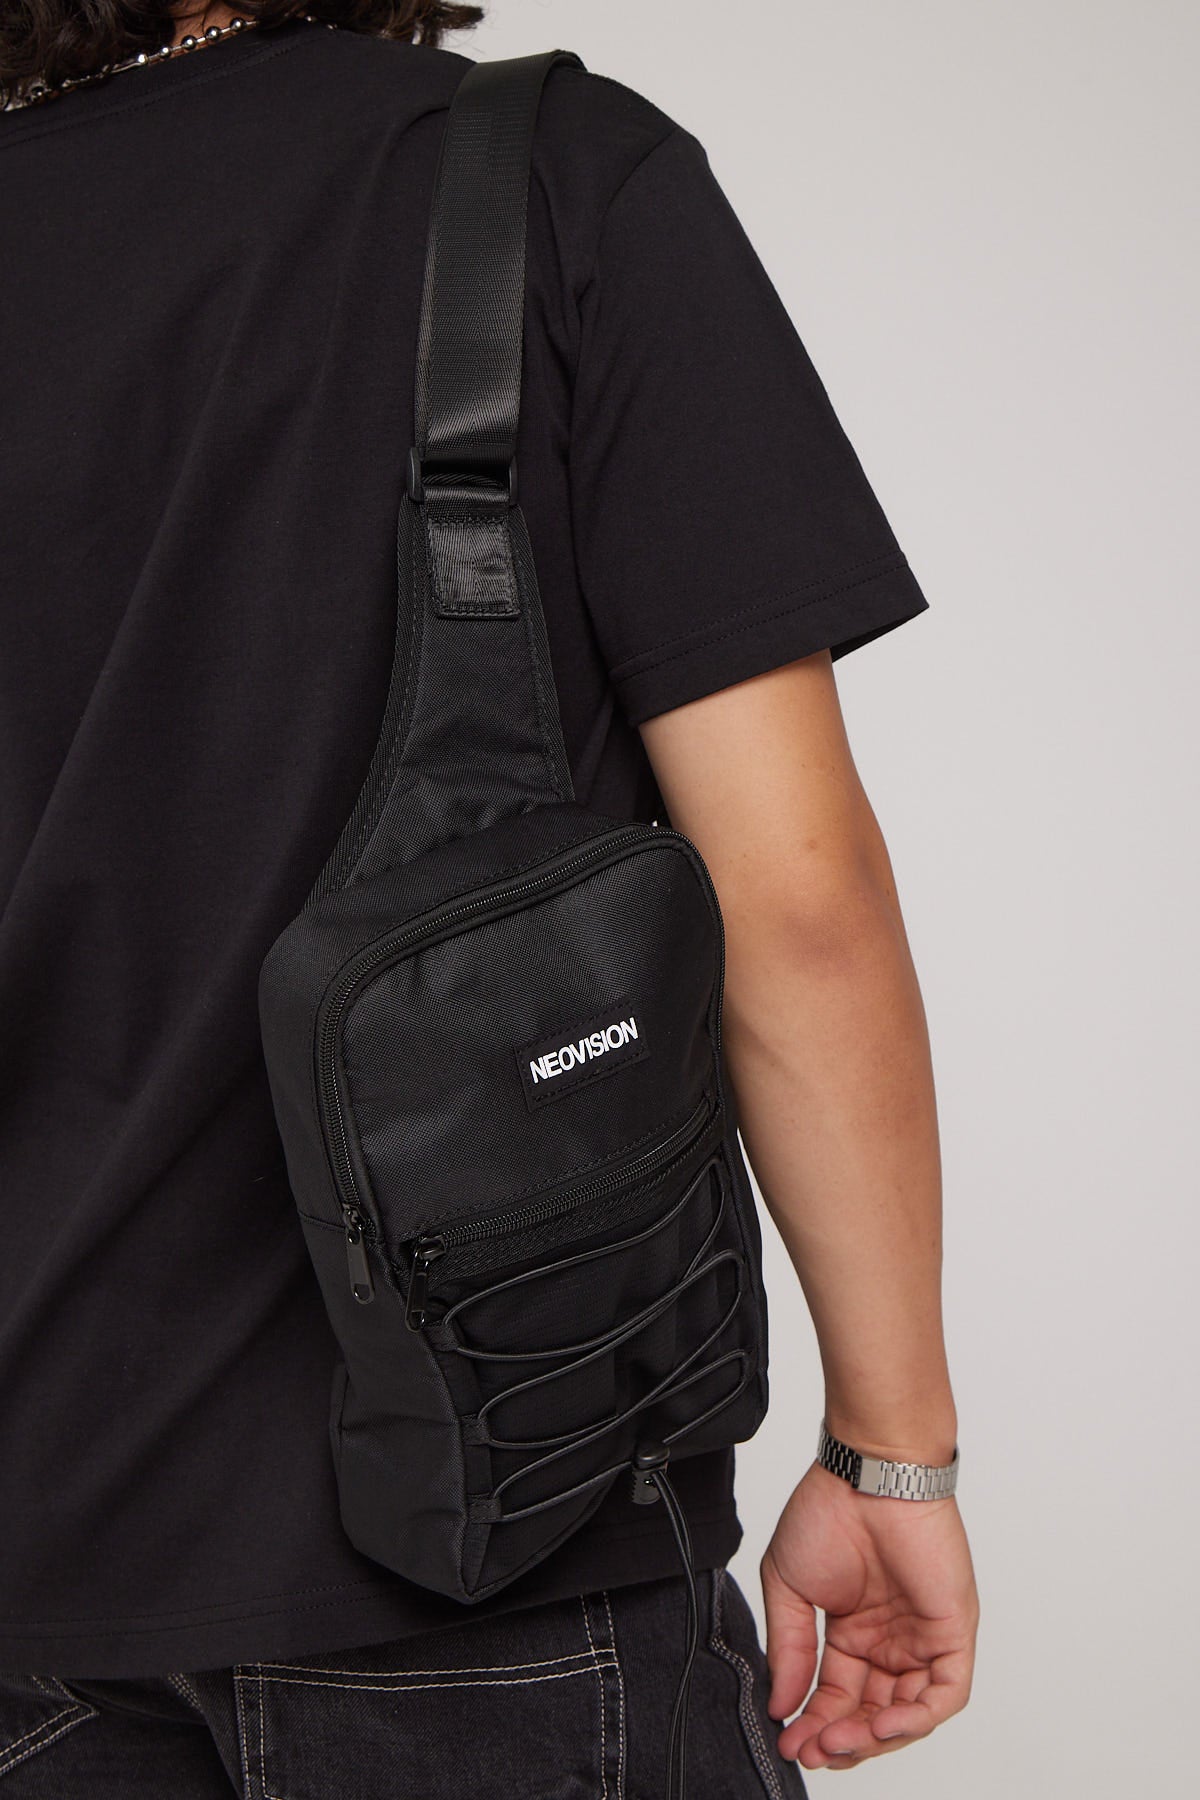 Neovision Infinity Crossbody Backpack Black – Universal Store